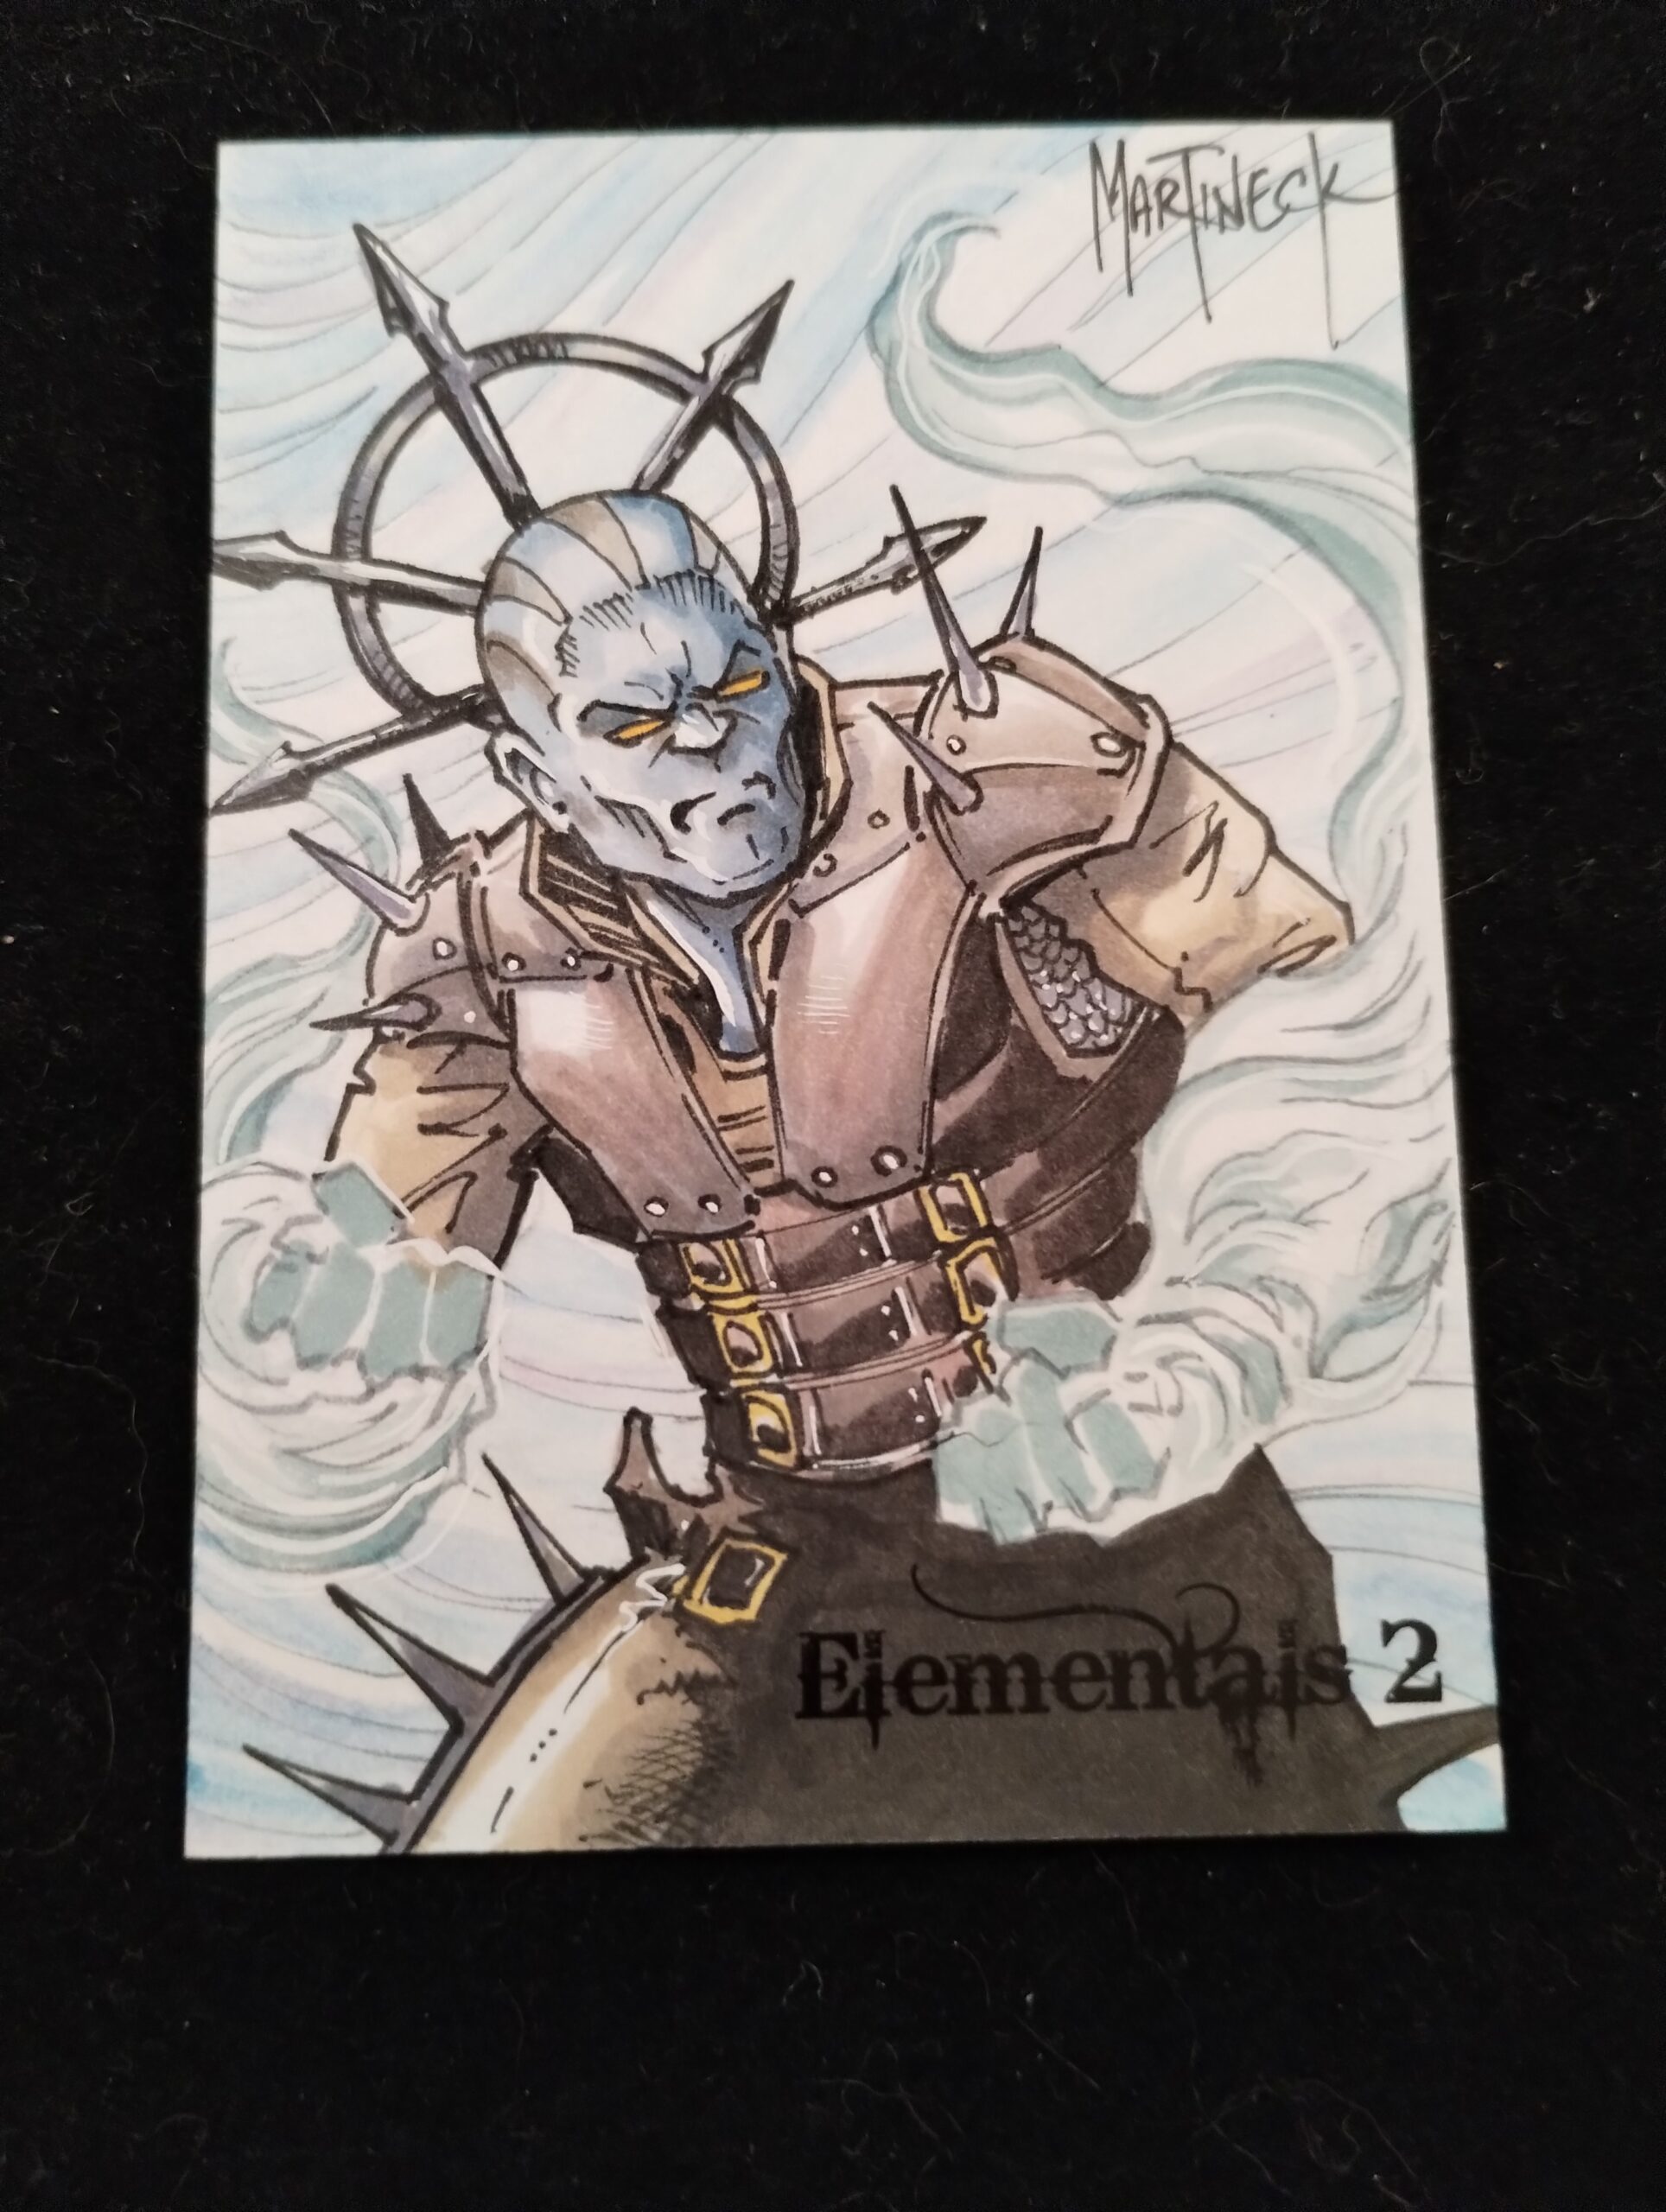 Elementals 2 sketch card by Martineck